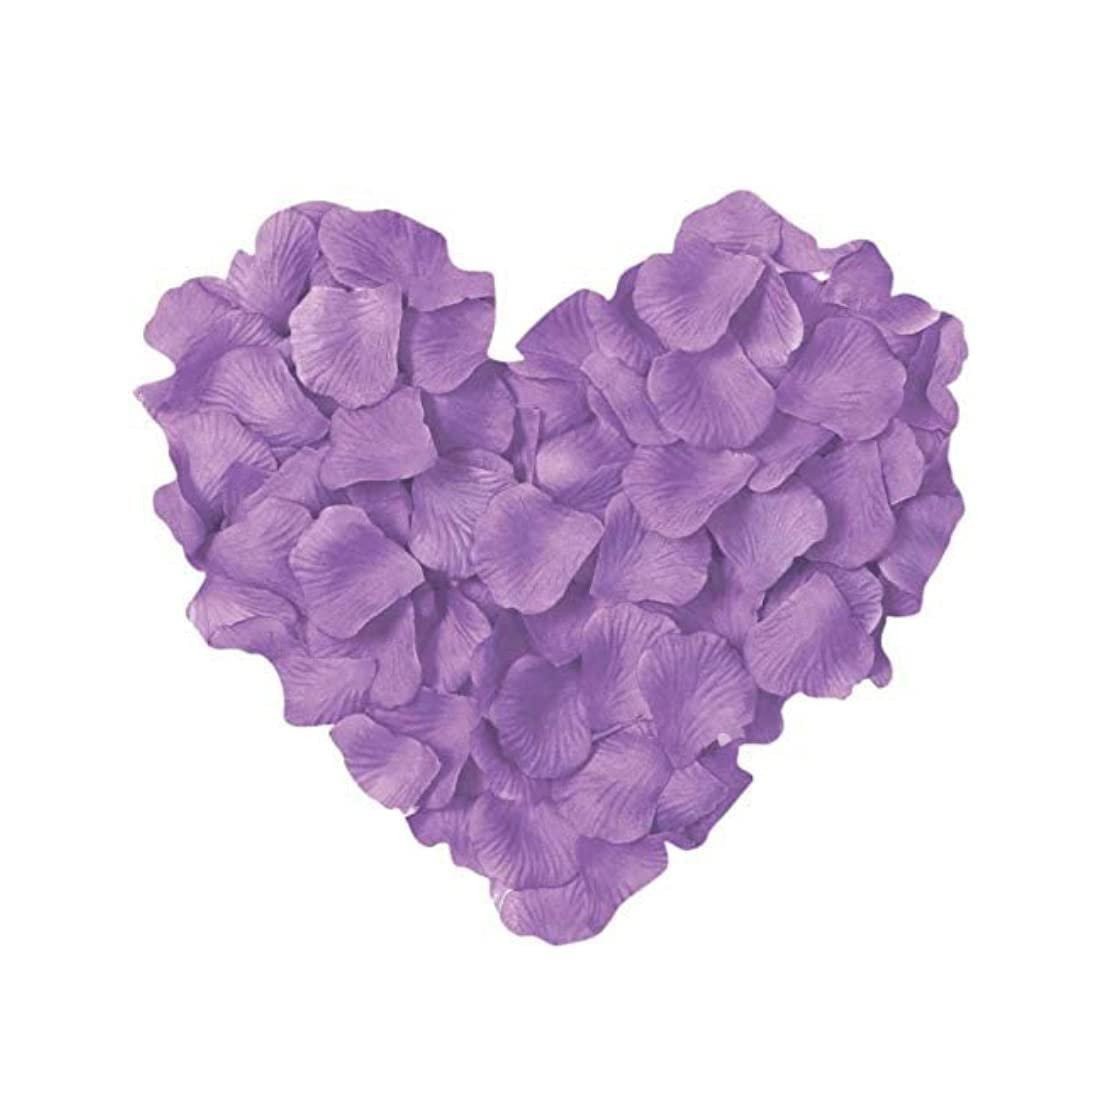 100pcs Light Purple Silk Rose Petals Wedding Mothers Day Wedding Confetti Anniversary Table Decorations - image 1